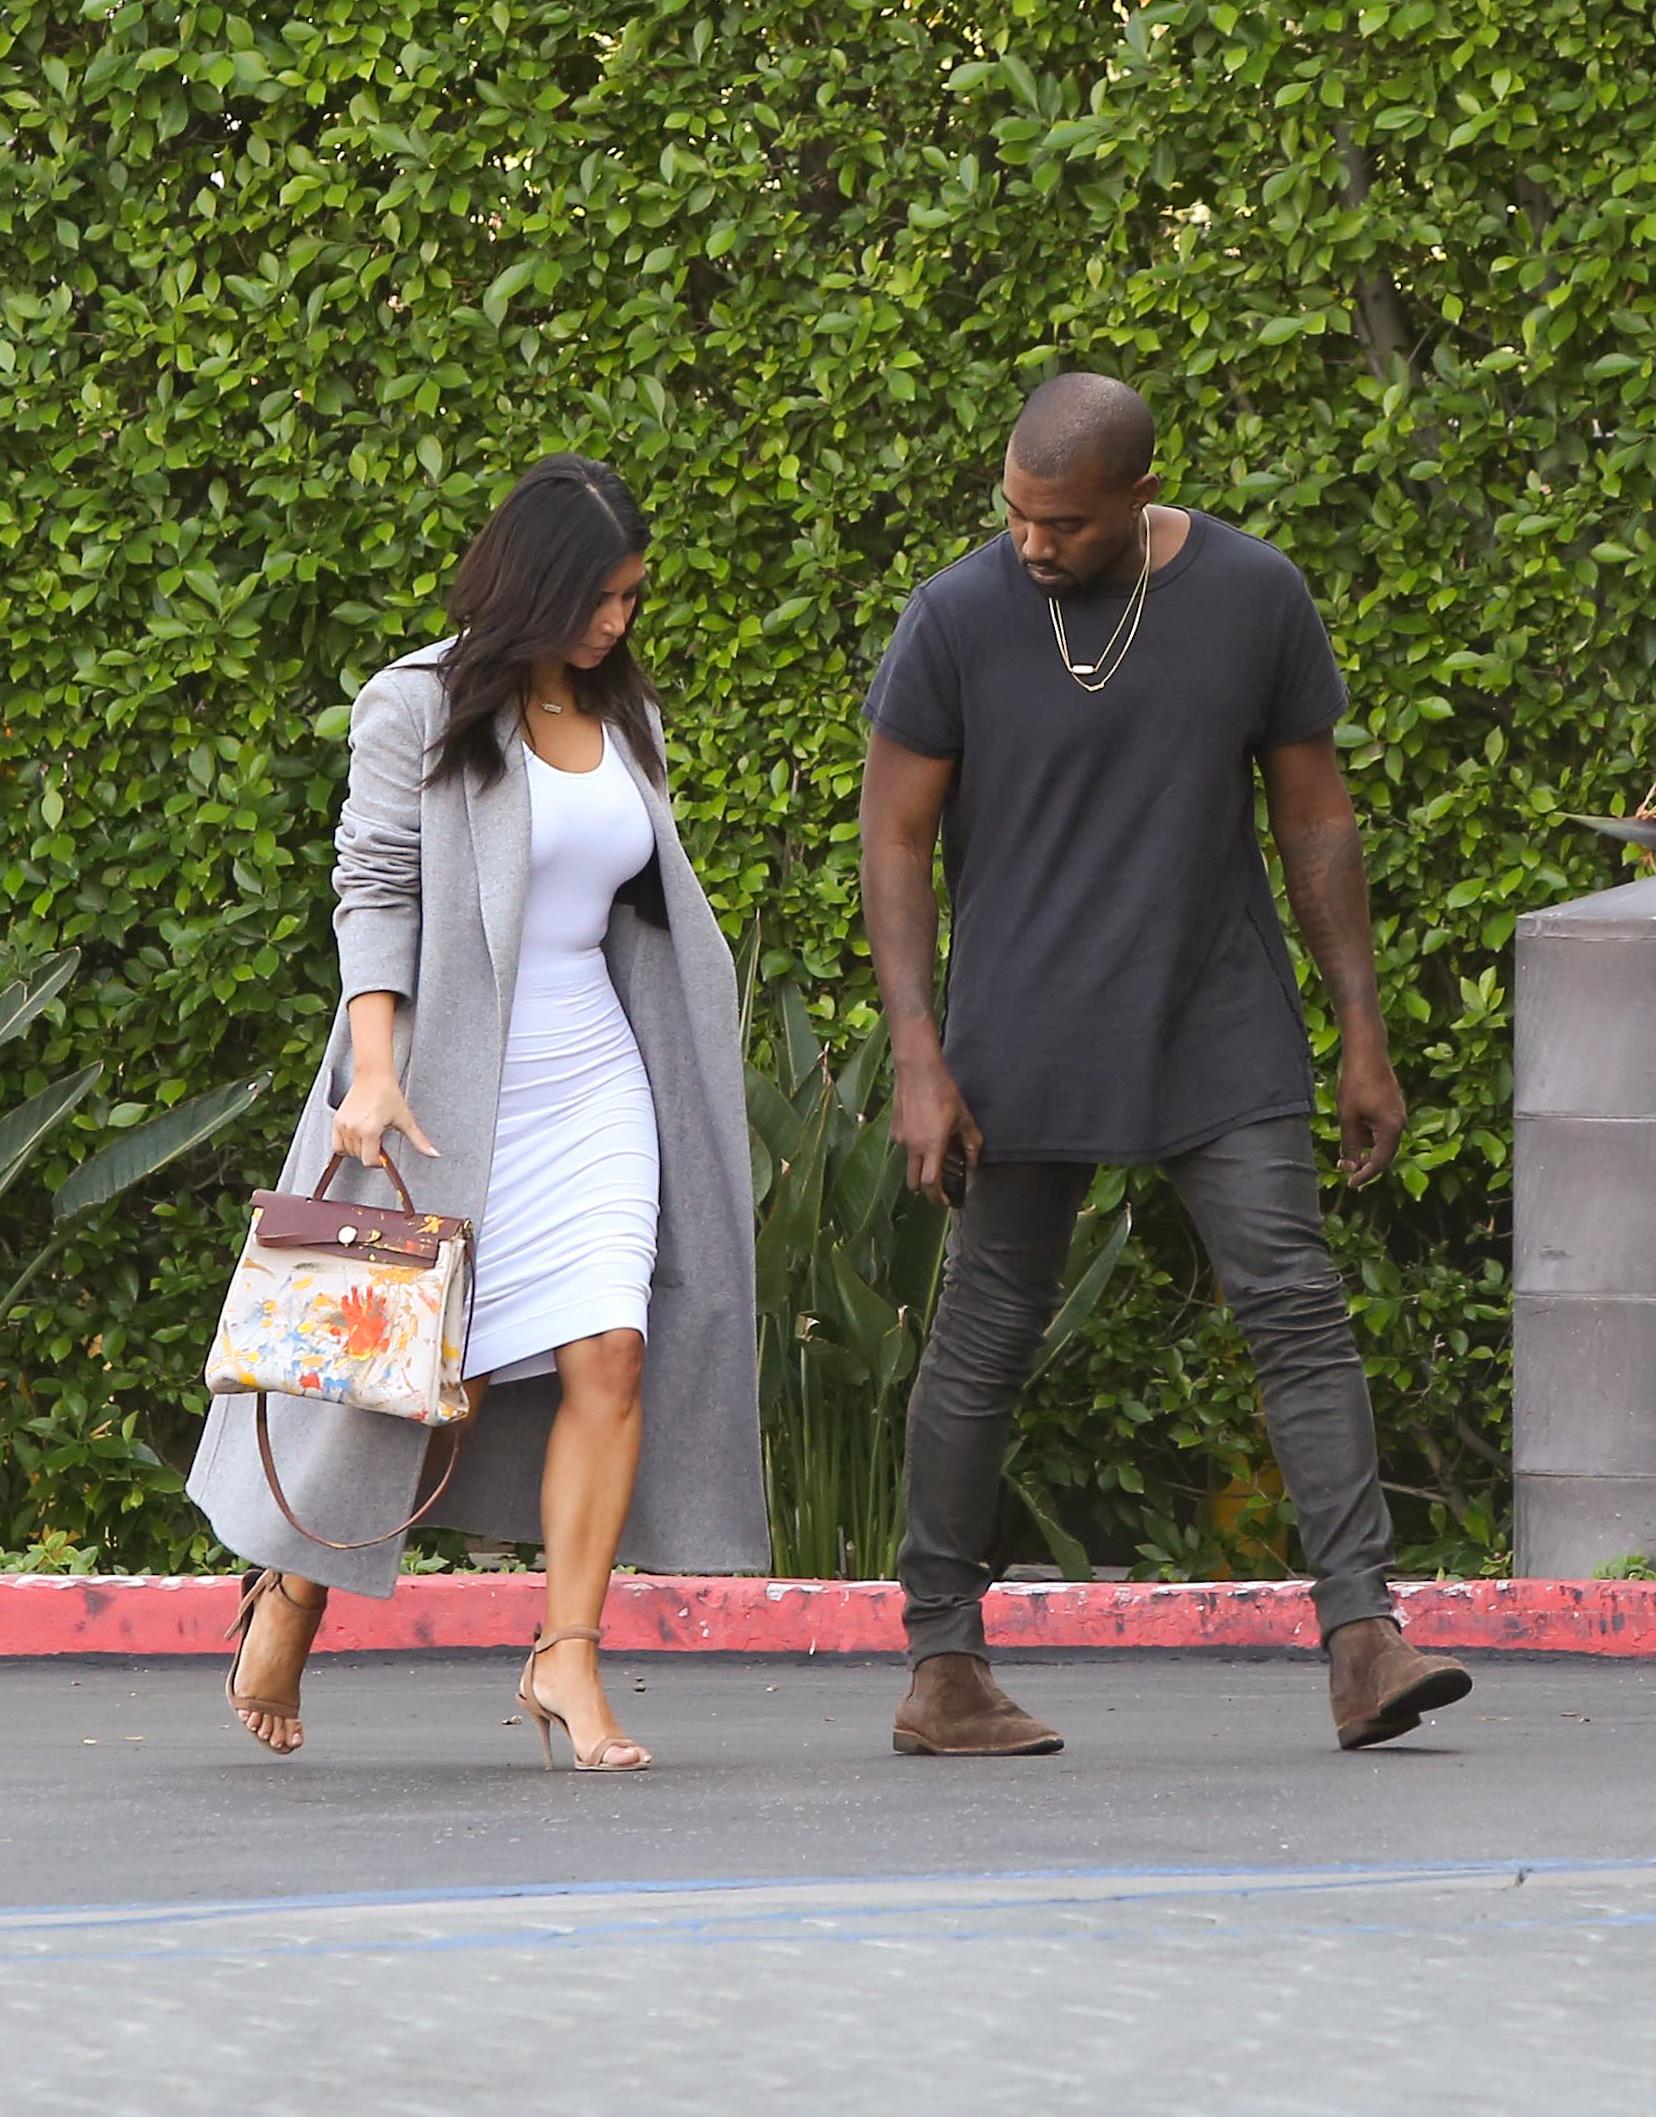 Kanye West Gifts Kim Kardashian With Hand-Painted Birkin Bag for Christmas  [PHOTO]